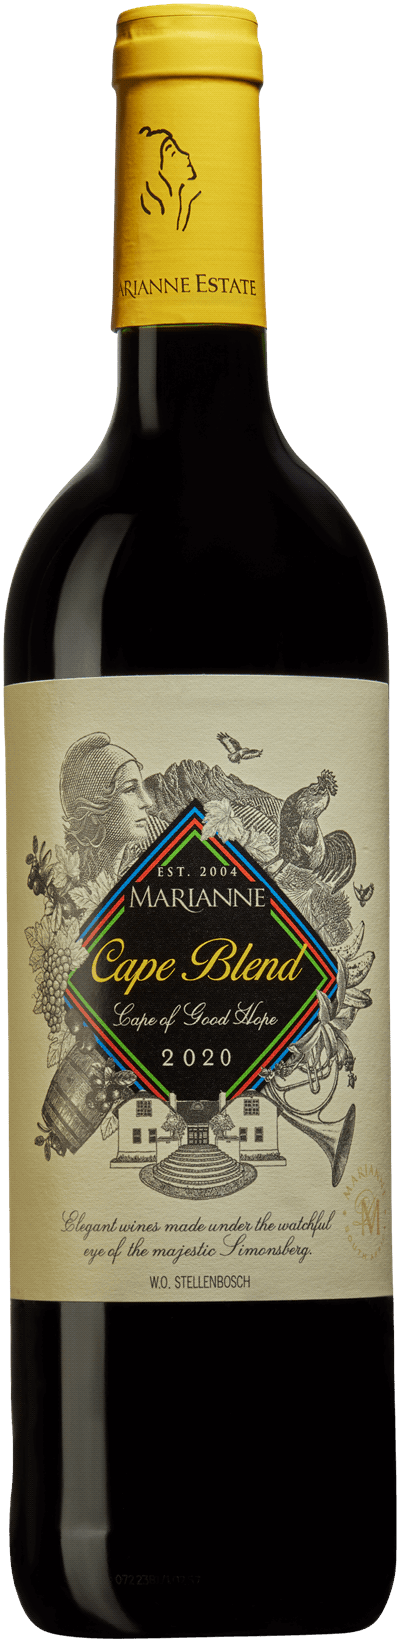 Marianne Cape Blend